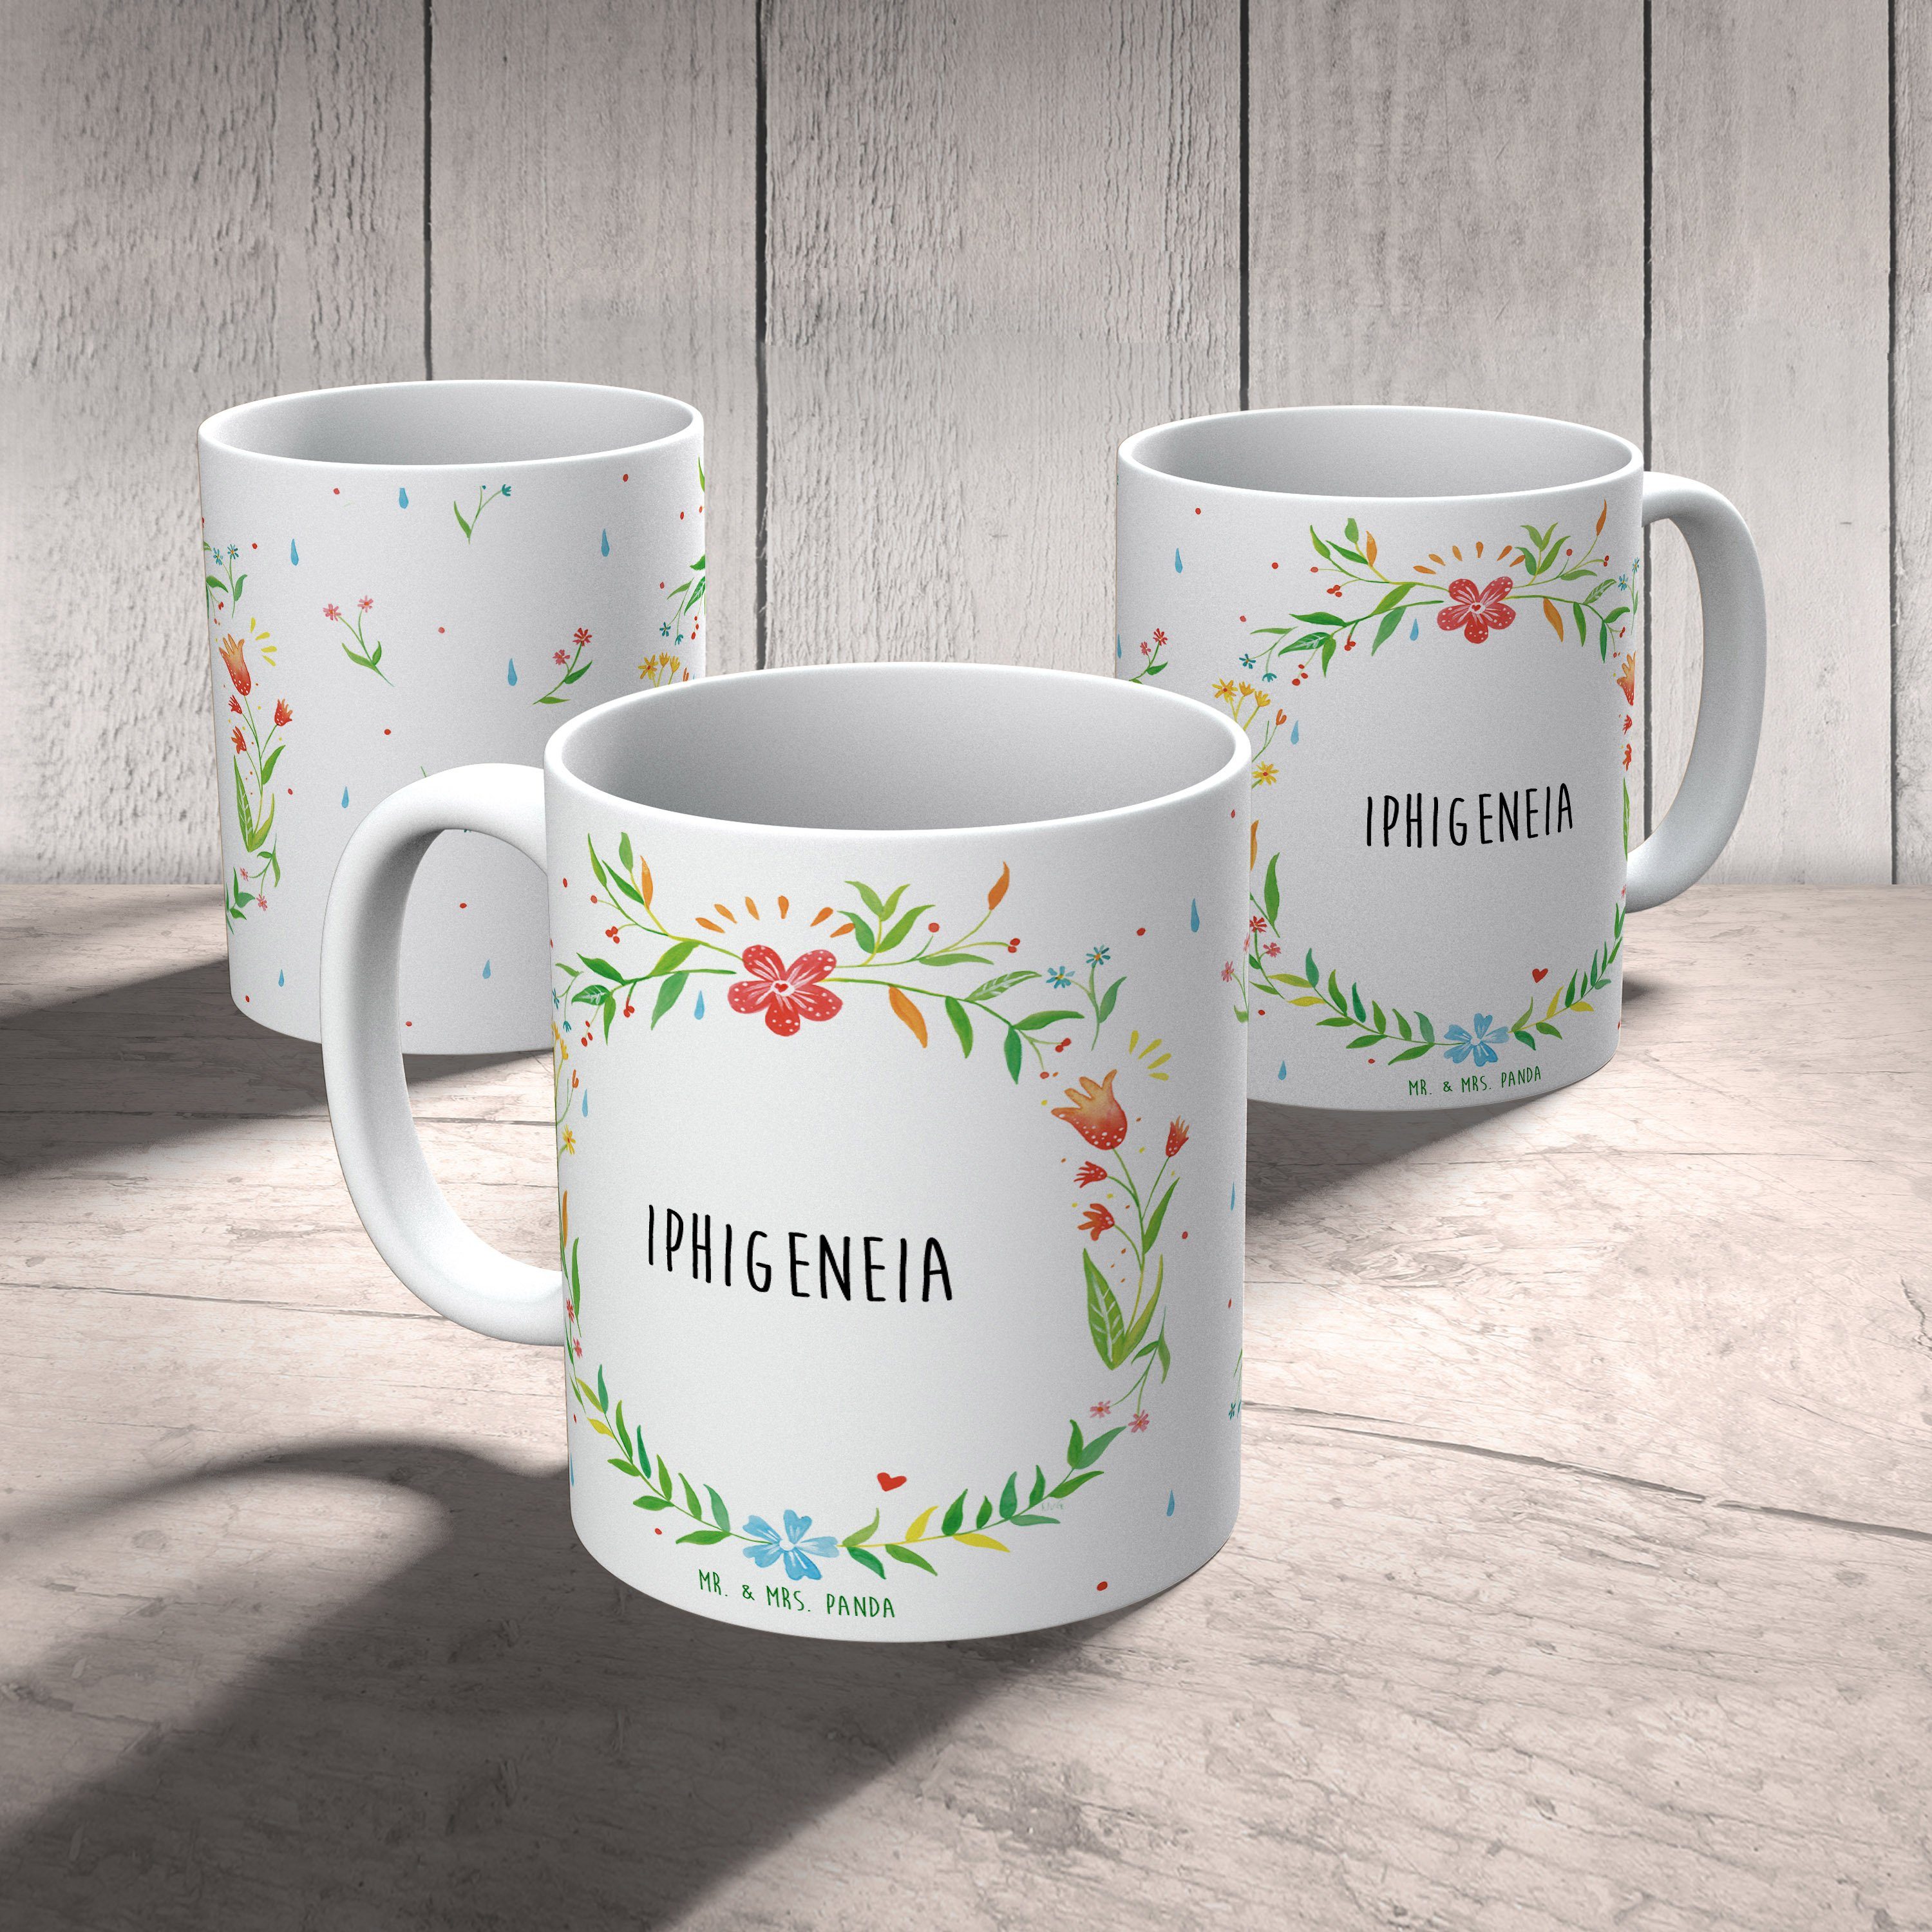 Mr. & Iphigeneia Büro - Kaffeetasse, Panda Mrs. Tasse, Keramik Keramiktasse, S, Geschenk, Tasse Tasse